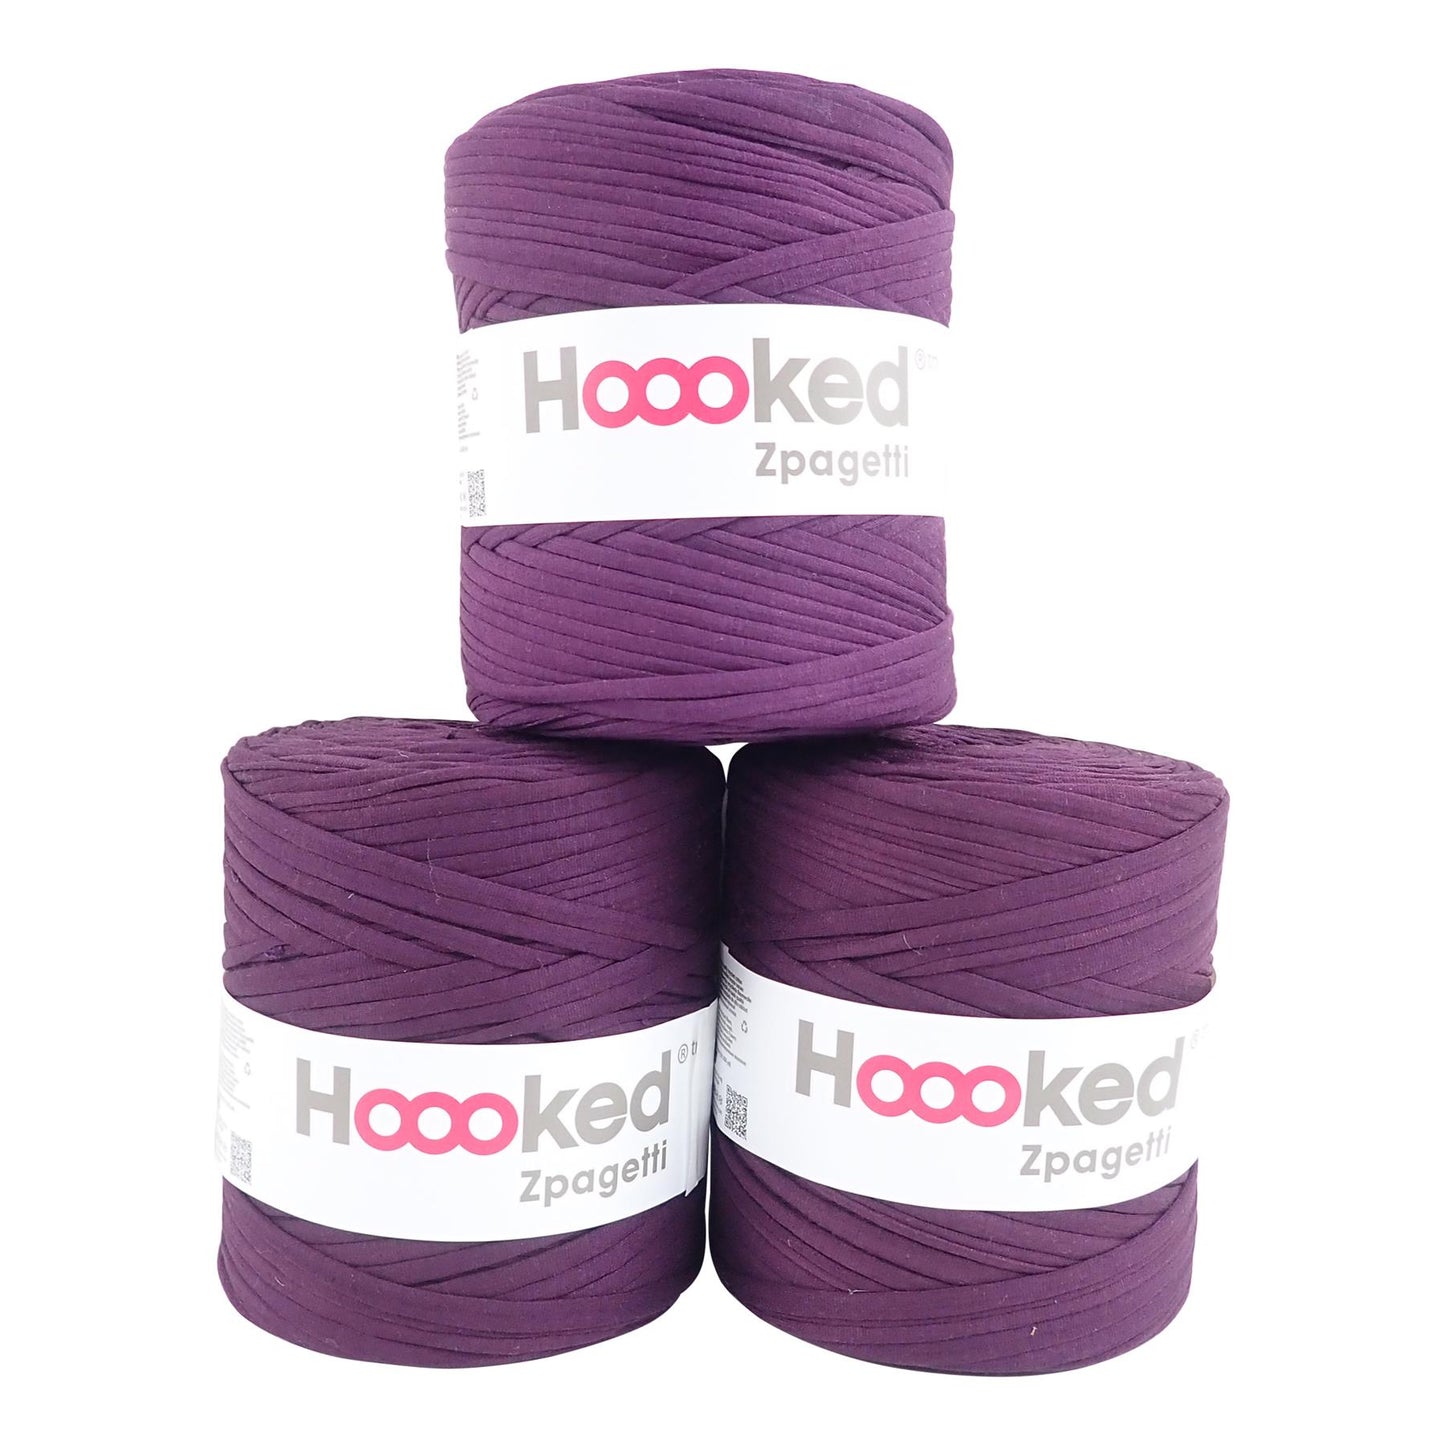 Hoooked Zpagetti Indigo Purple Cotton T-Shirt Yarn - 120M 700g (Pack of 3)